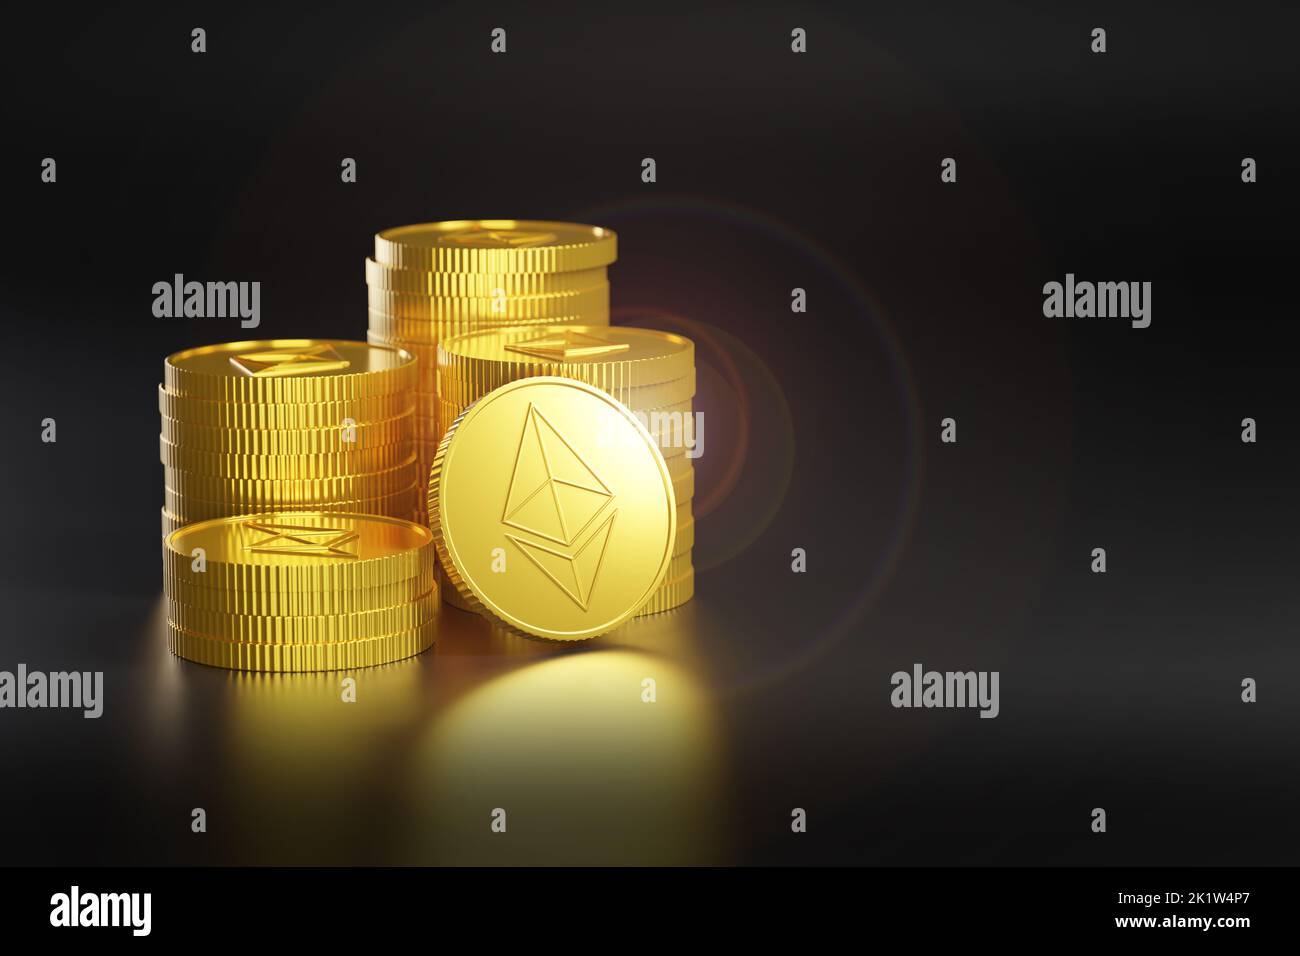 Stacks of ethereum coins on black background. 3d illustration. Stock Photo